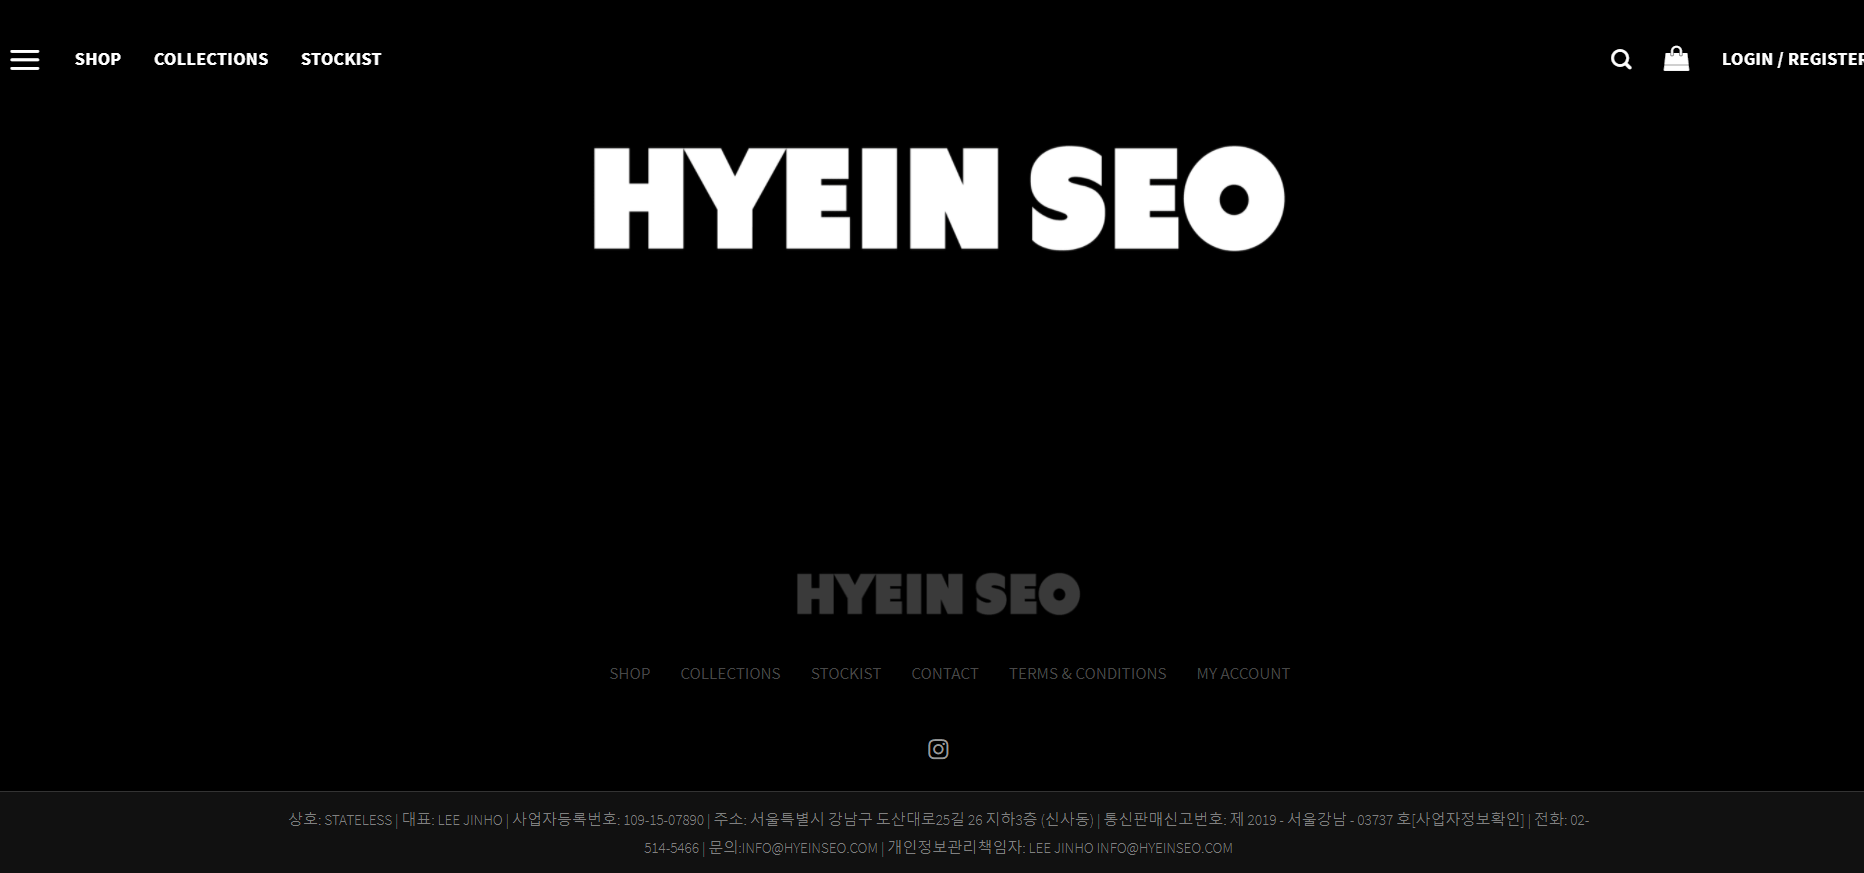 Hyein Seo官网-韩国高街运动路线服饰品牌hyeinseo